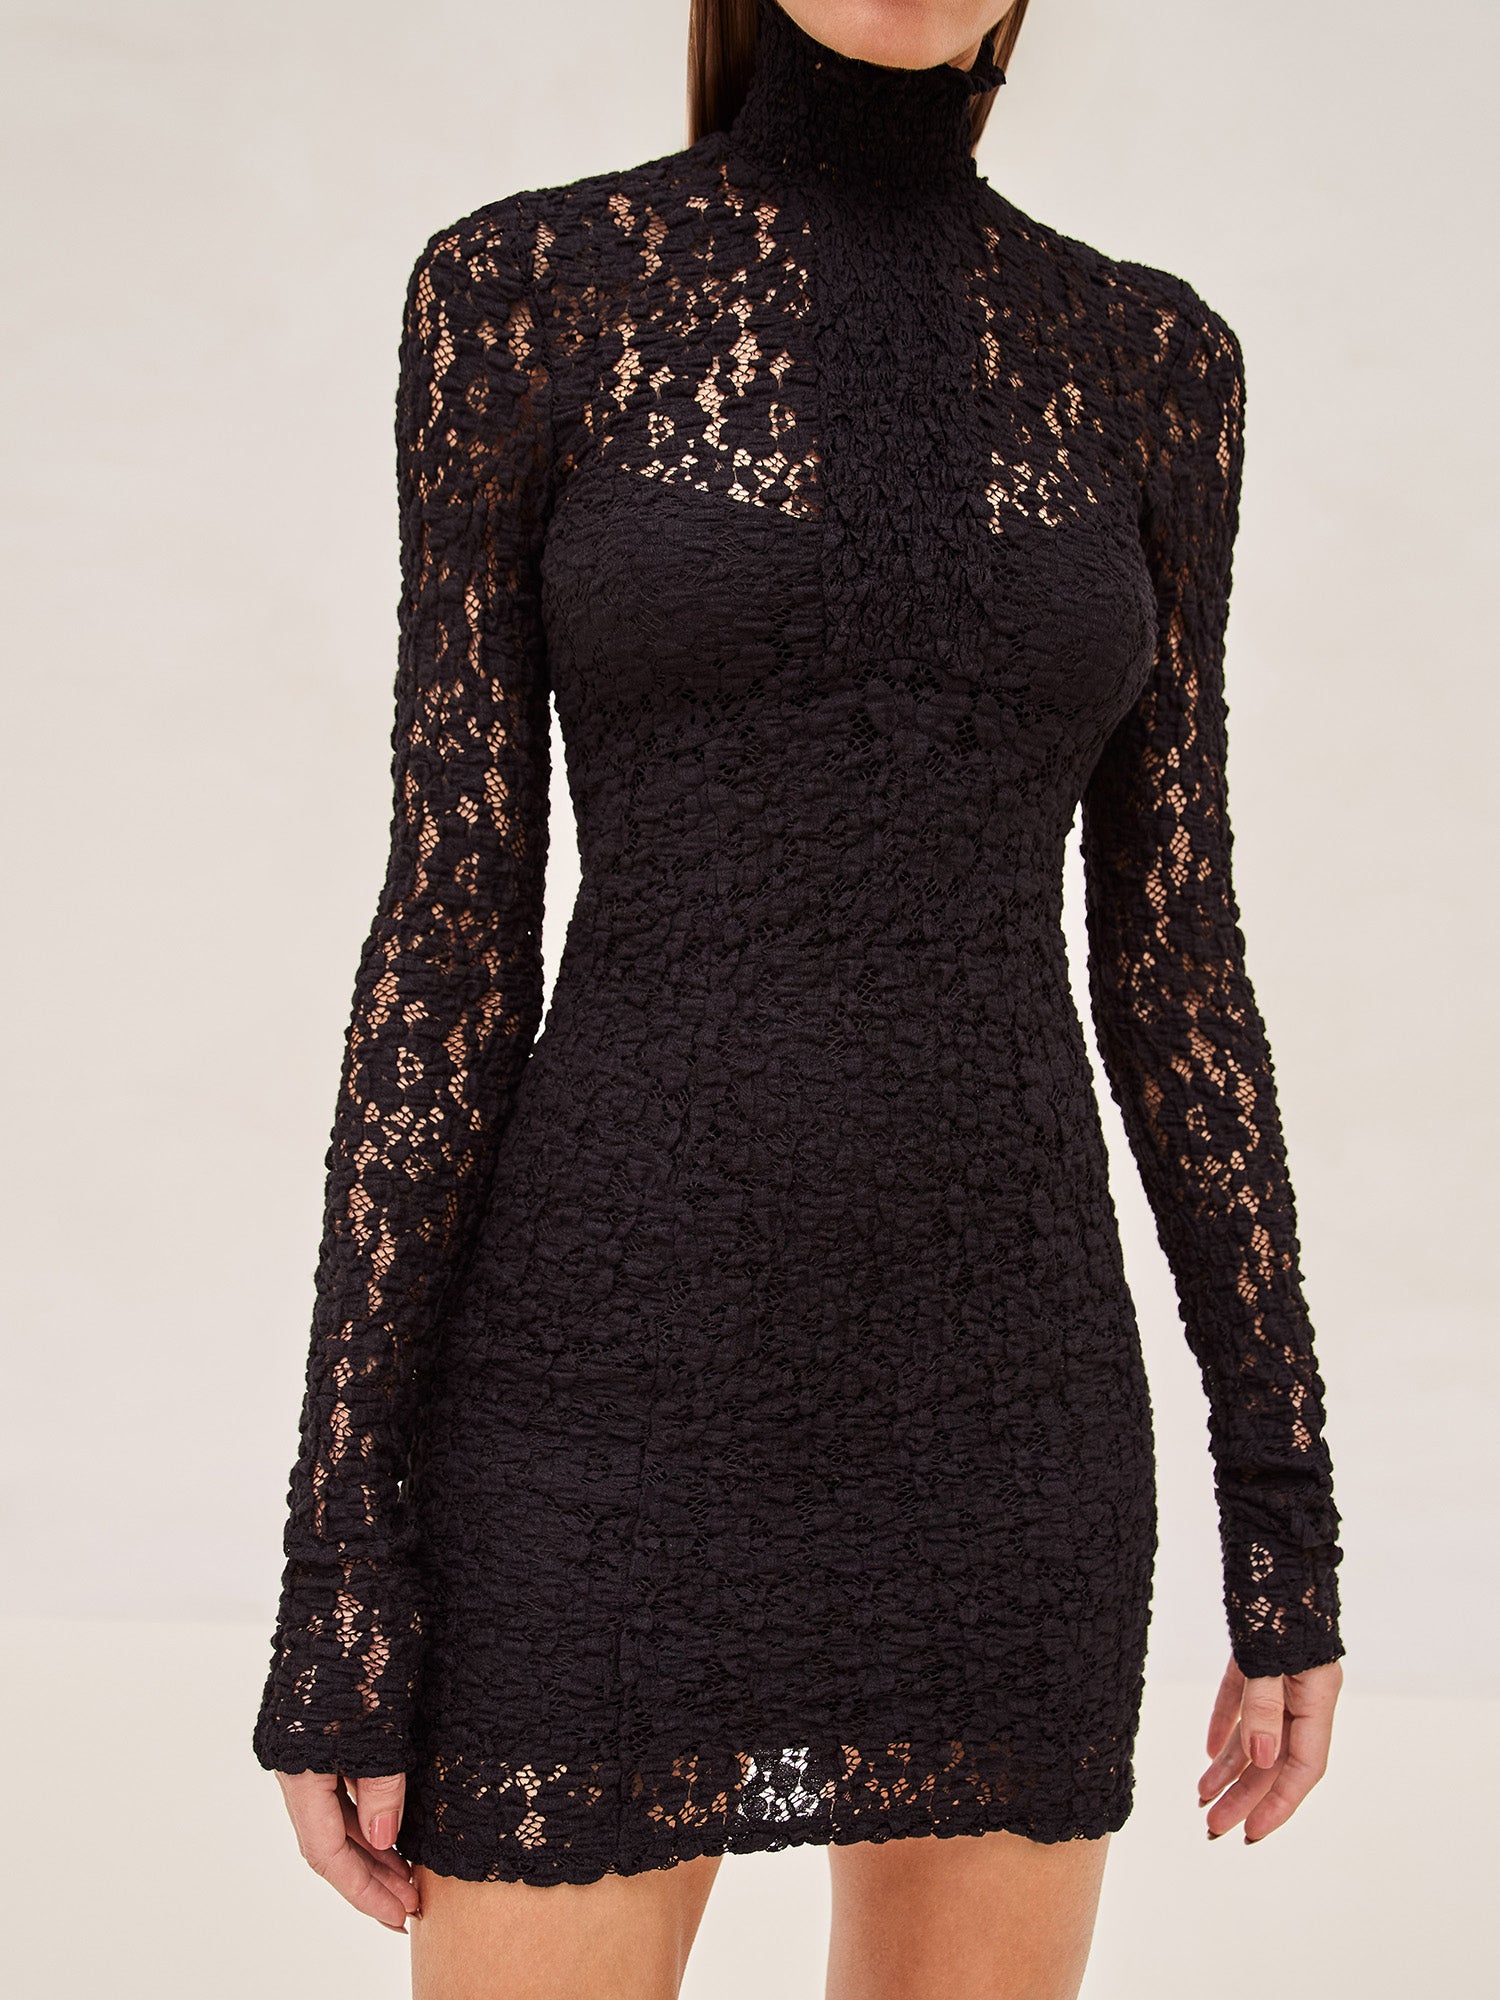 Alexis Delia long sleeve, mock turtle neck lace mini dress in black.